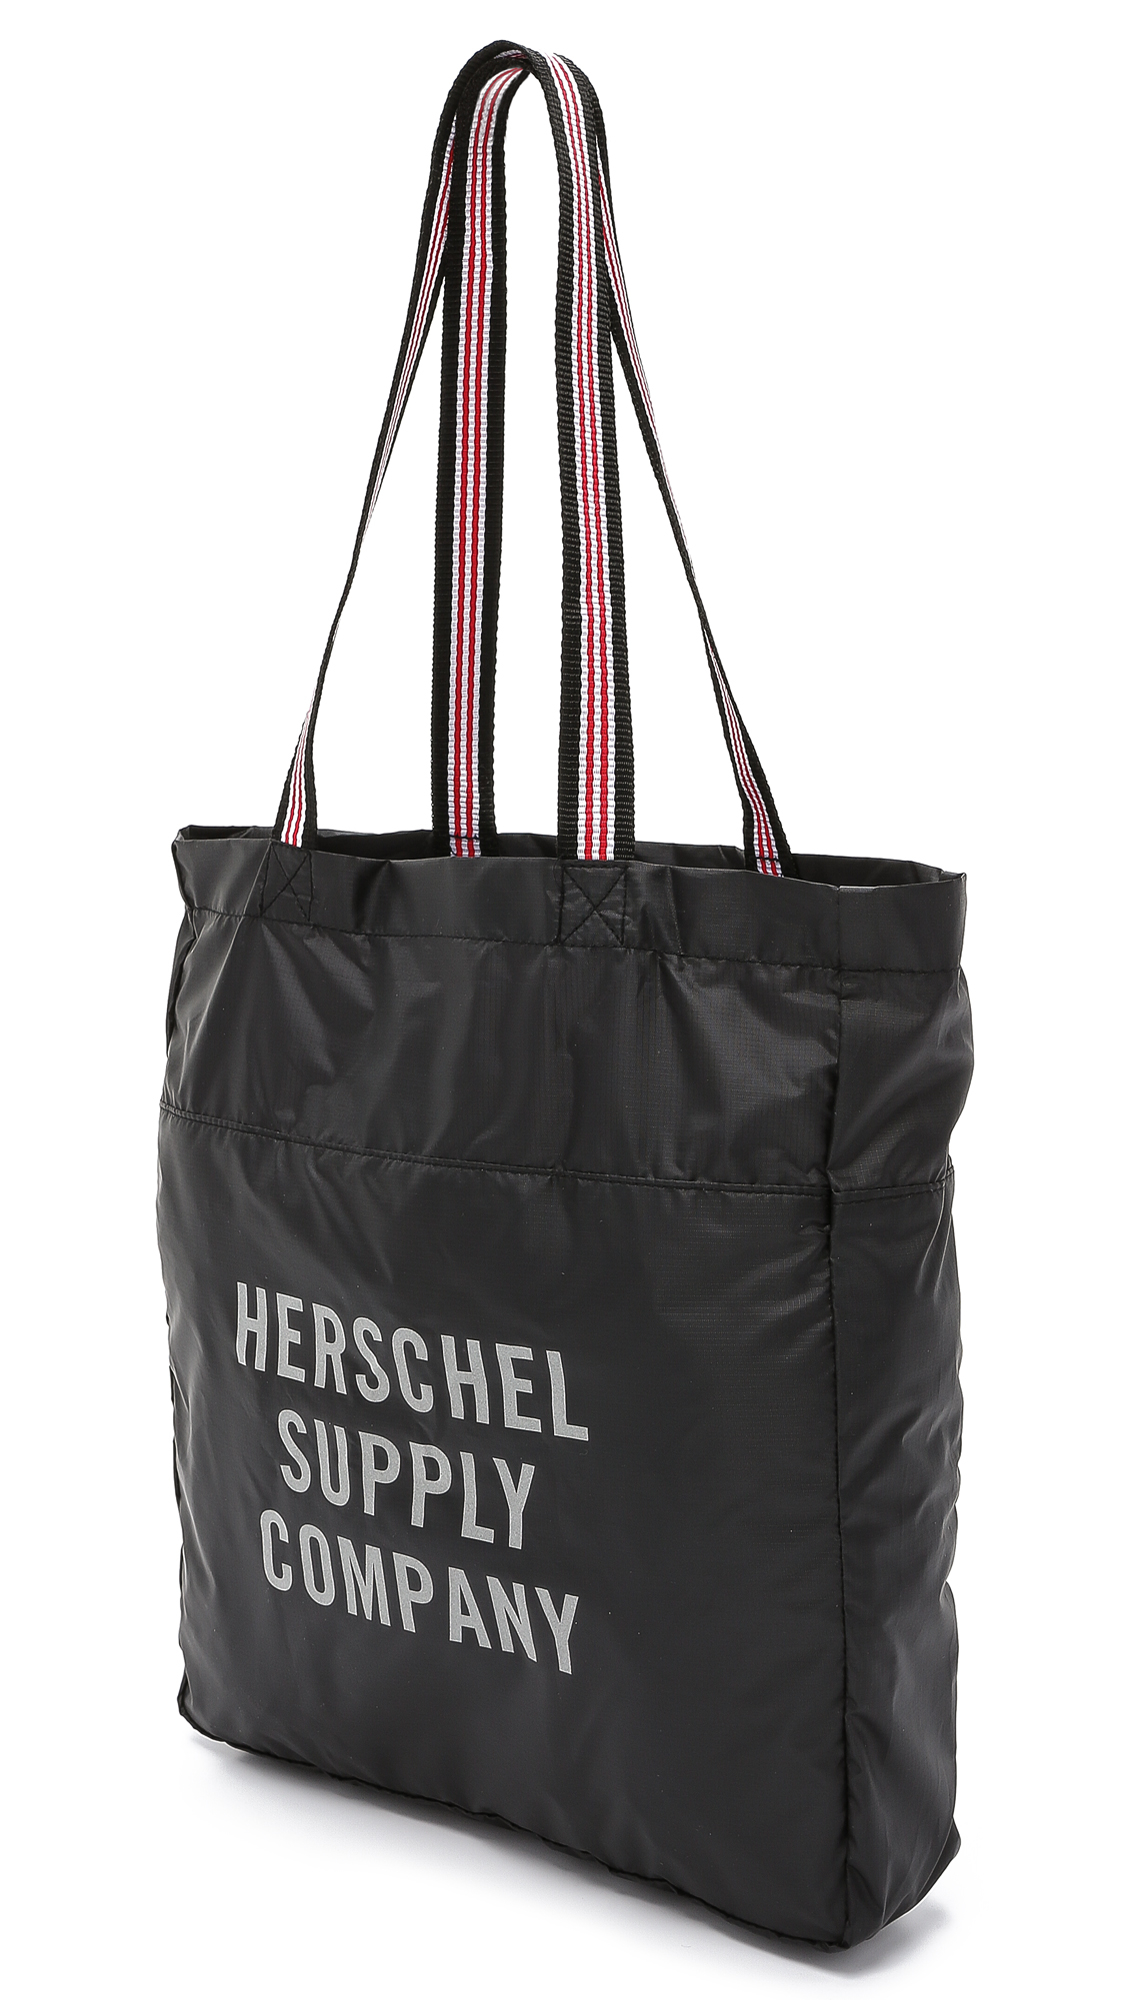 Lyst - Herschel Supply Co. Packable Travel Tote in Black for Men